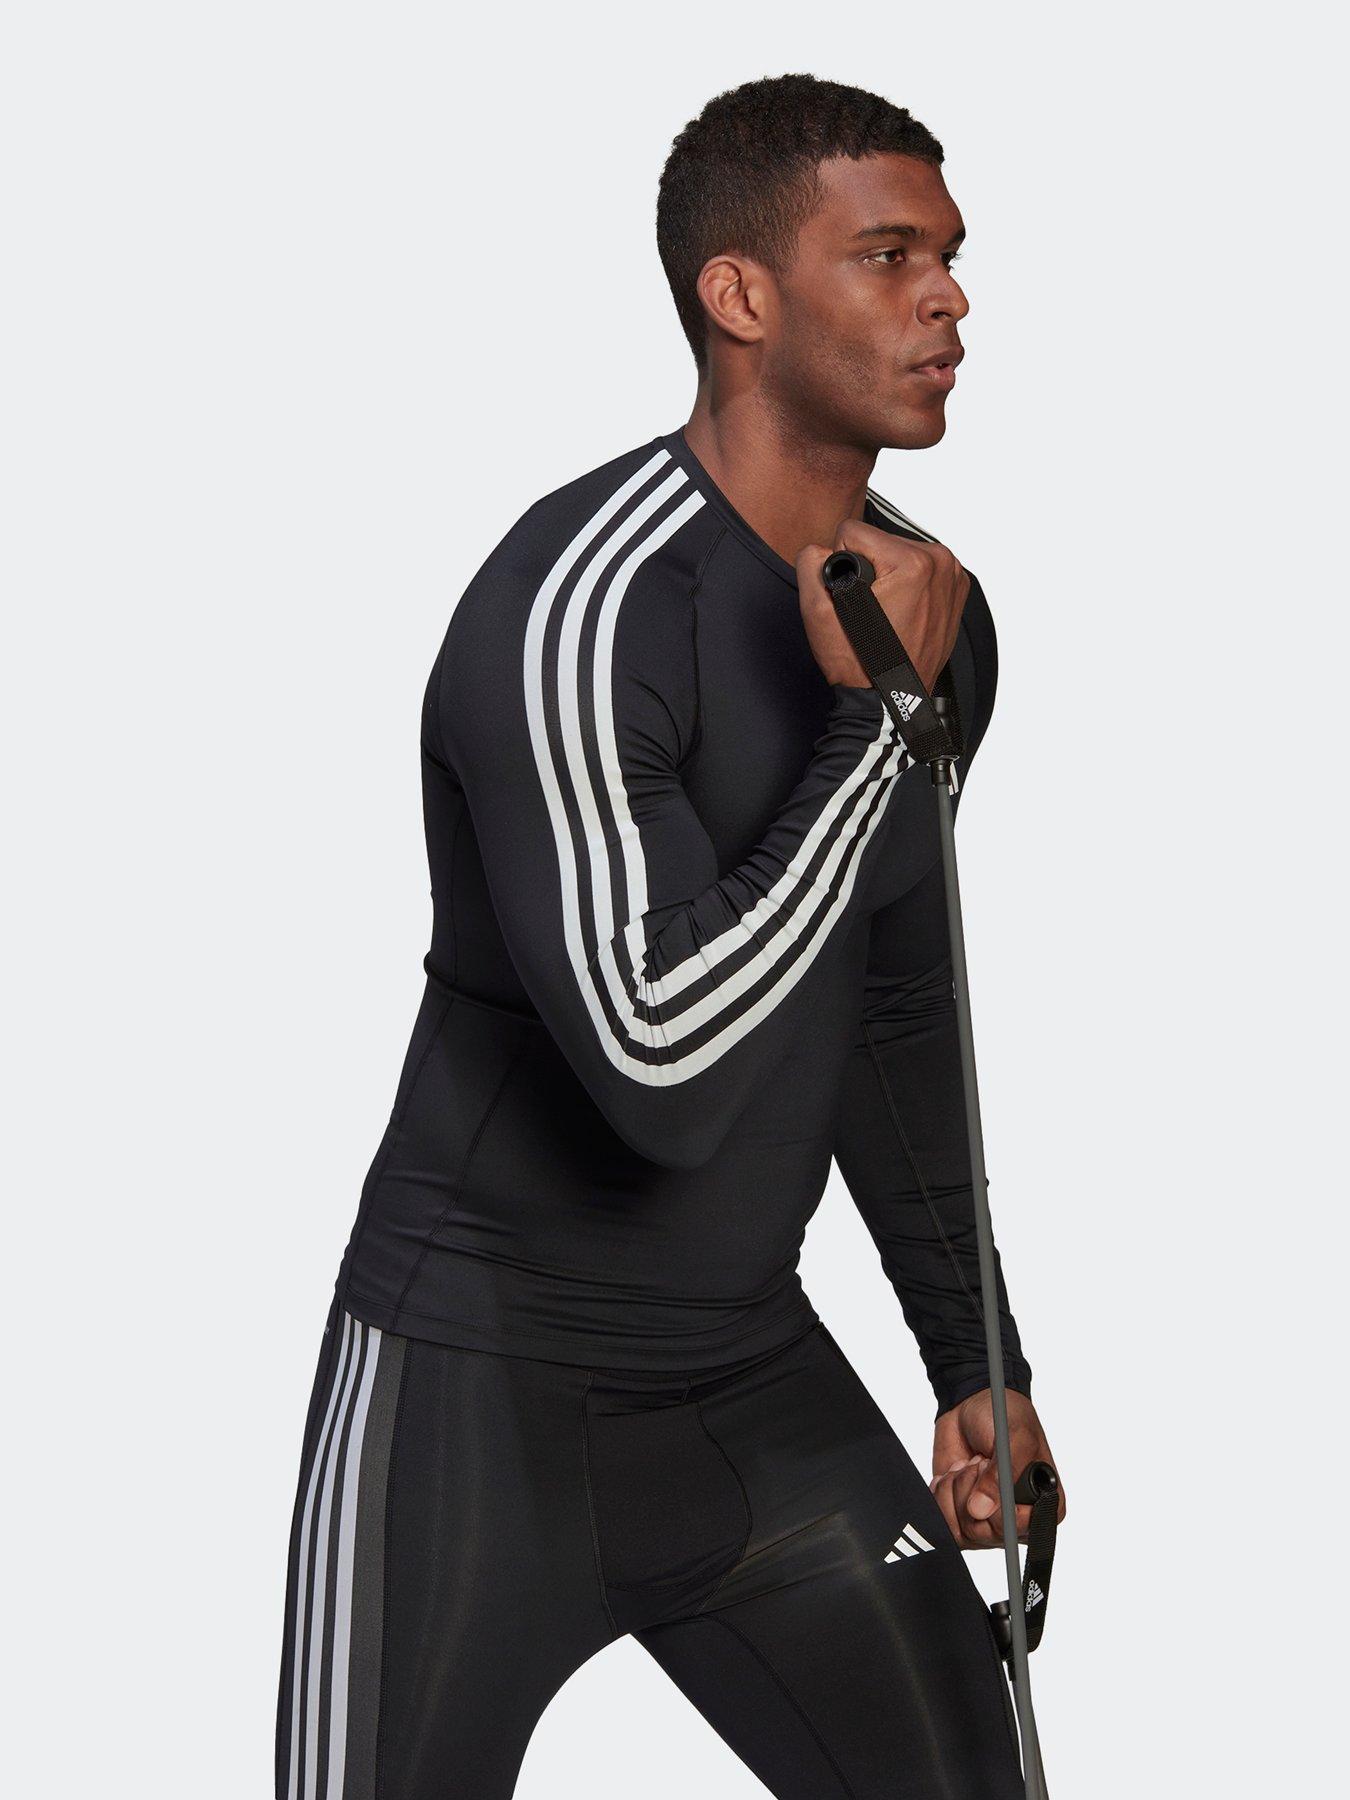 adidas Performance Techfit 3-stripes Training Long Leggings - Black